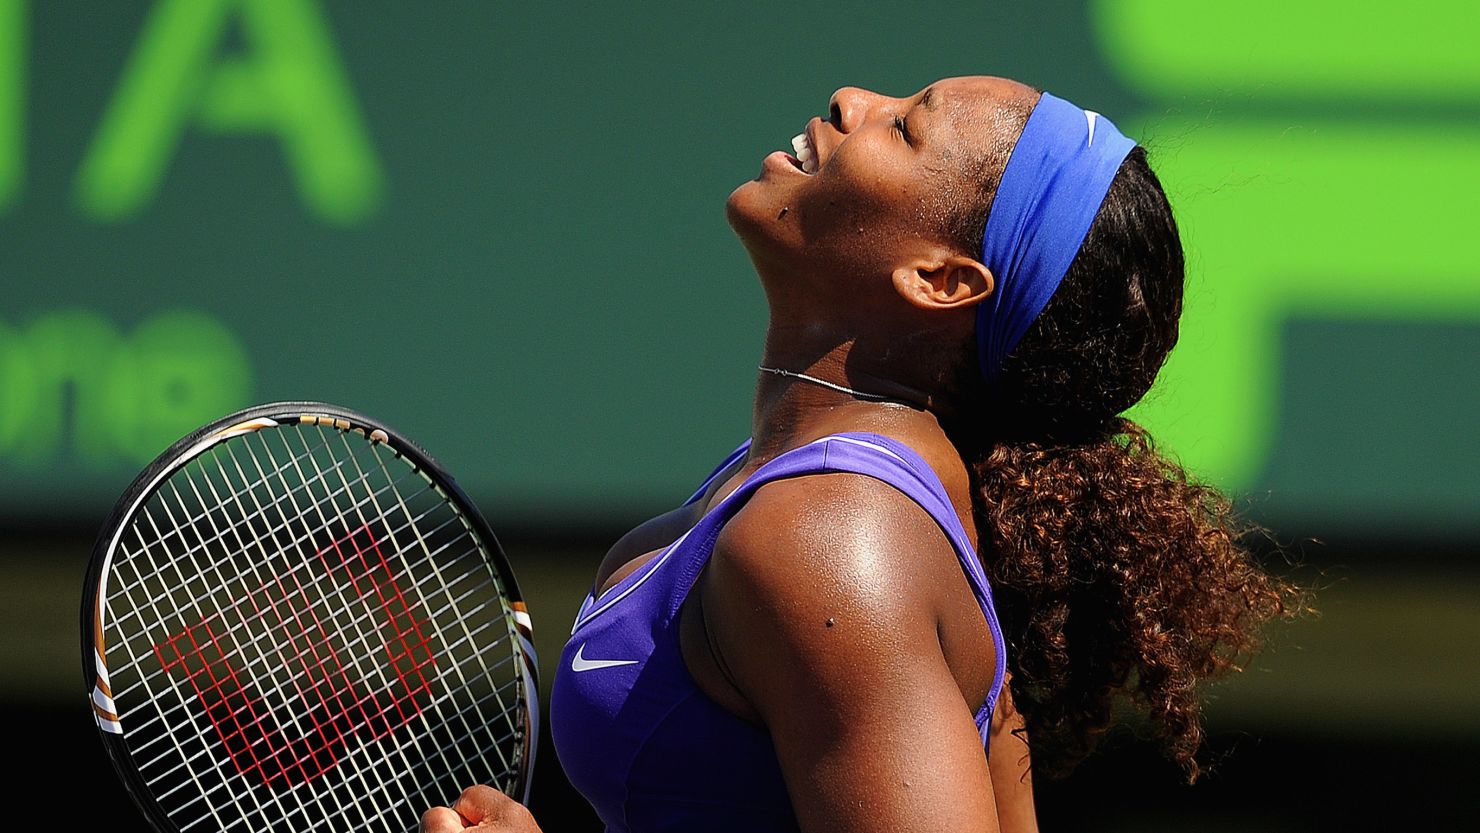 Serena Williams enjoyed her victory over Australian Samantha Stosur in Miami.